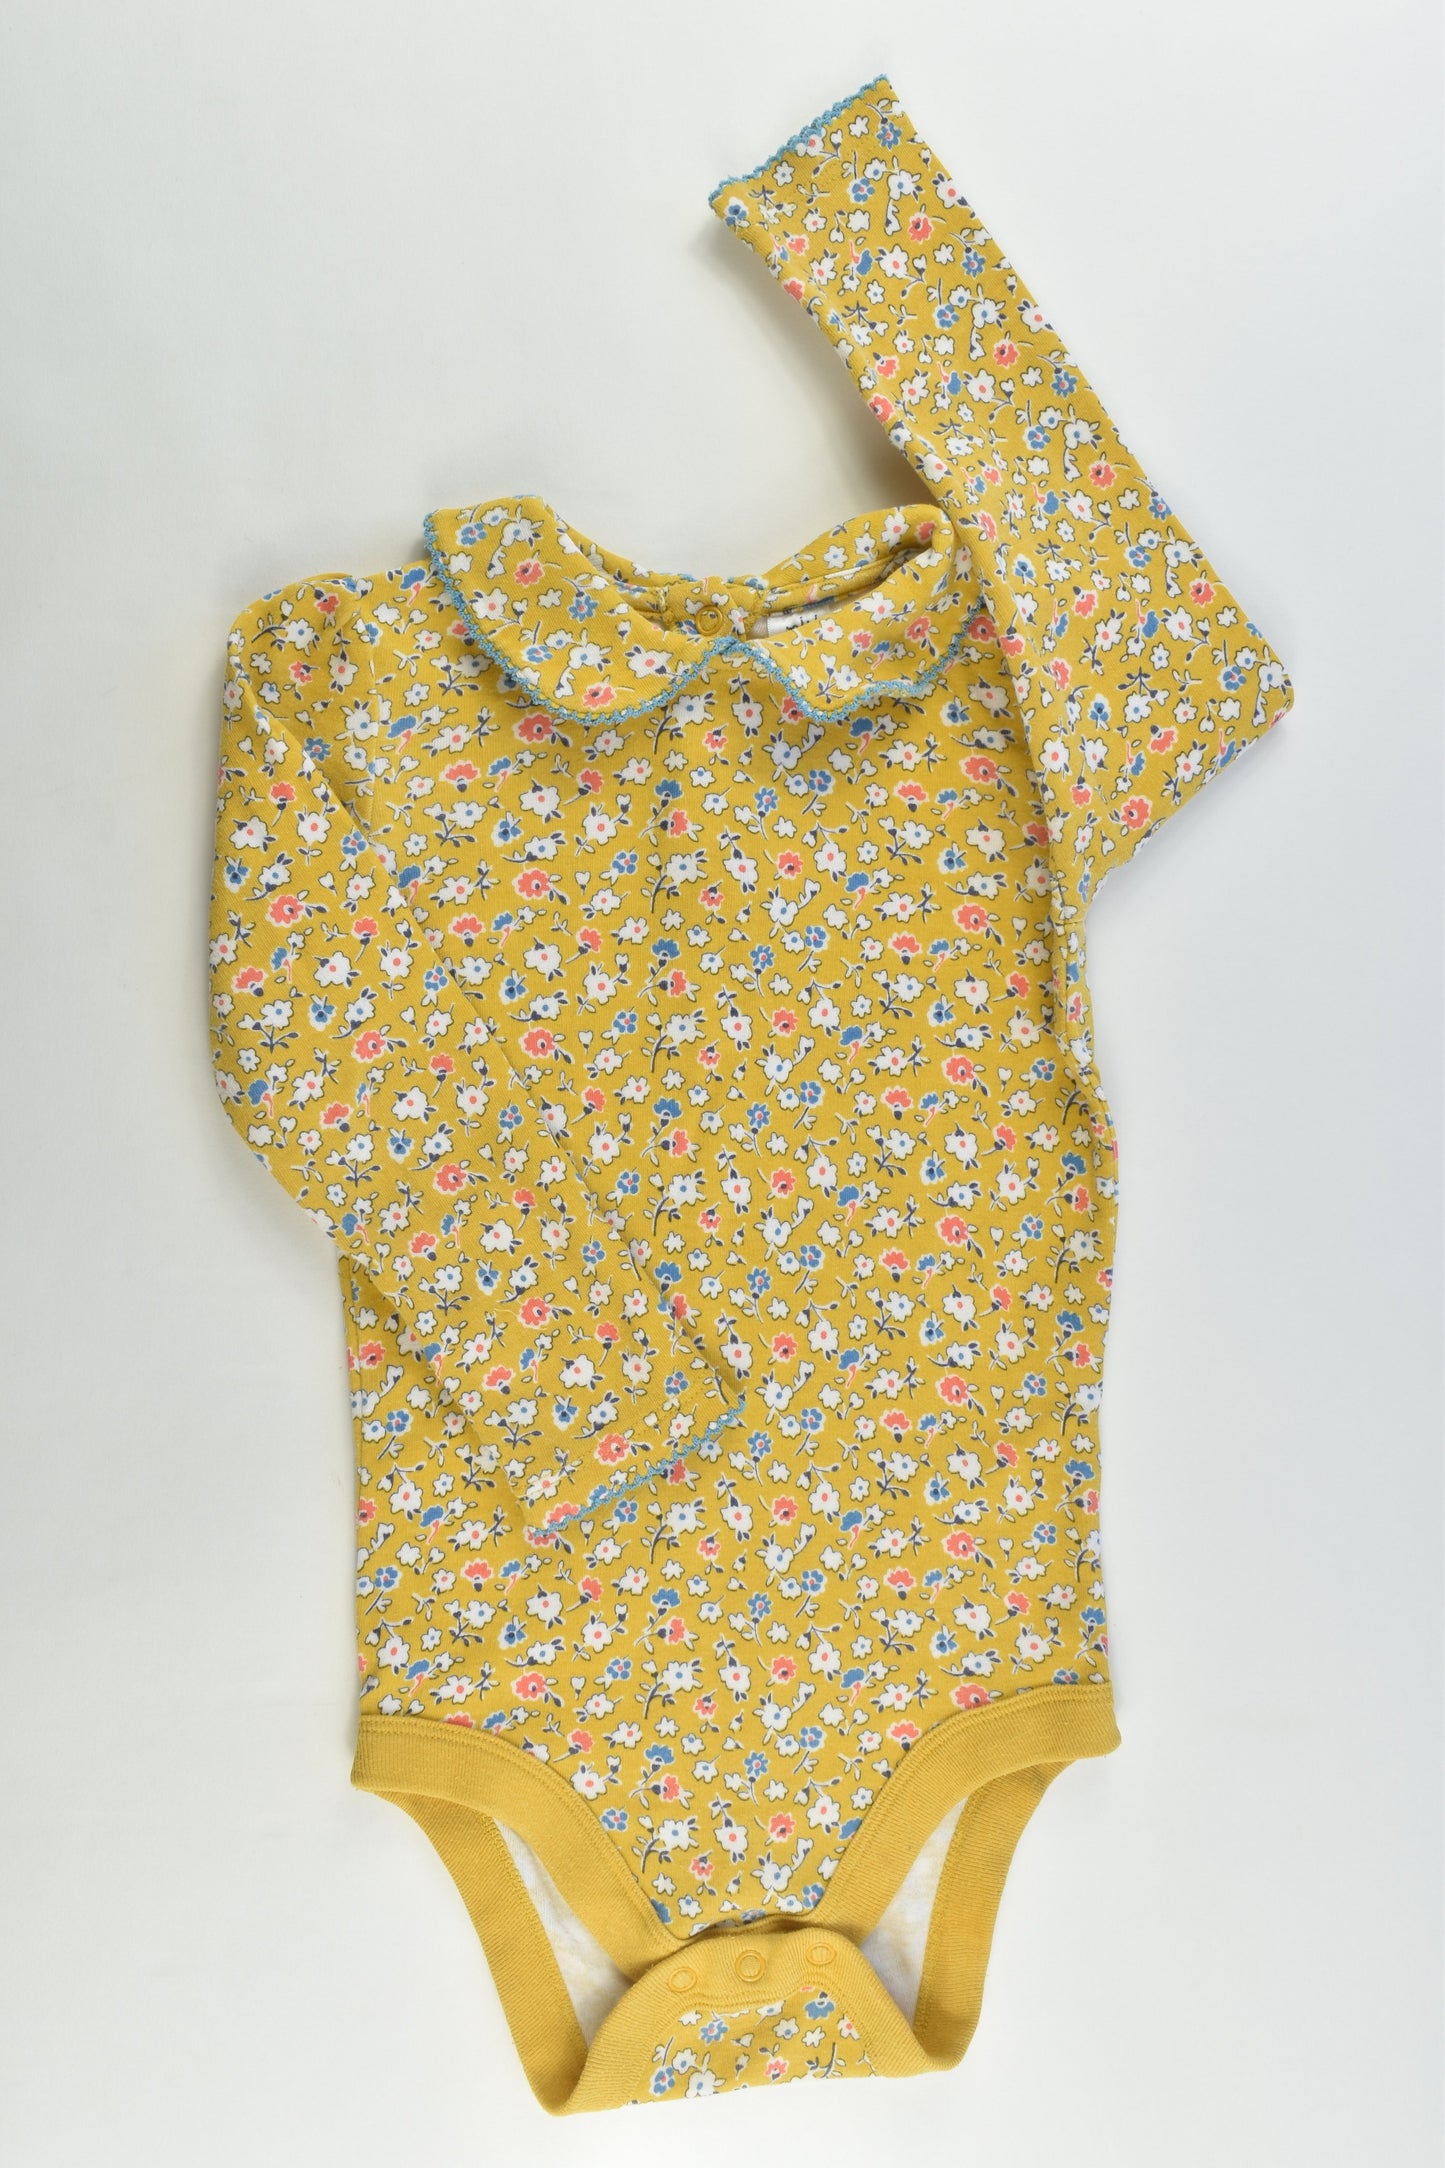 Mini Boden Size 18-24 months Floral Mustard Bodysuit